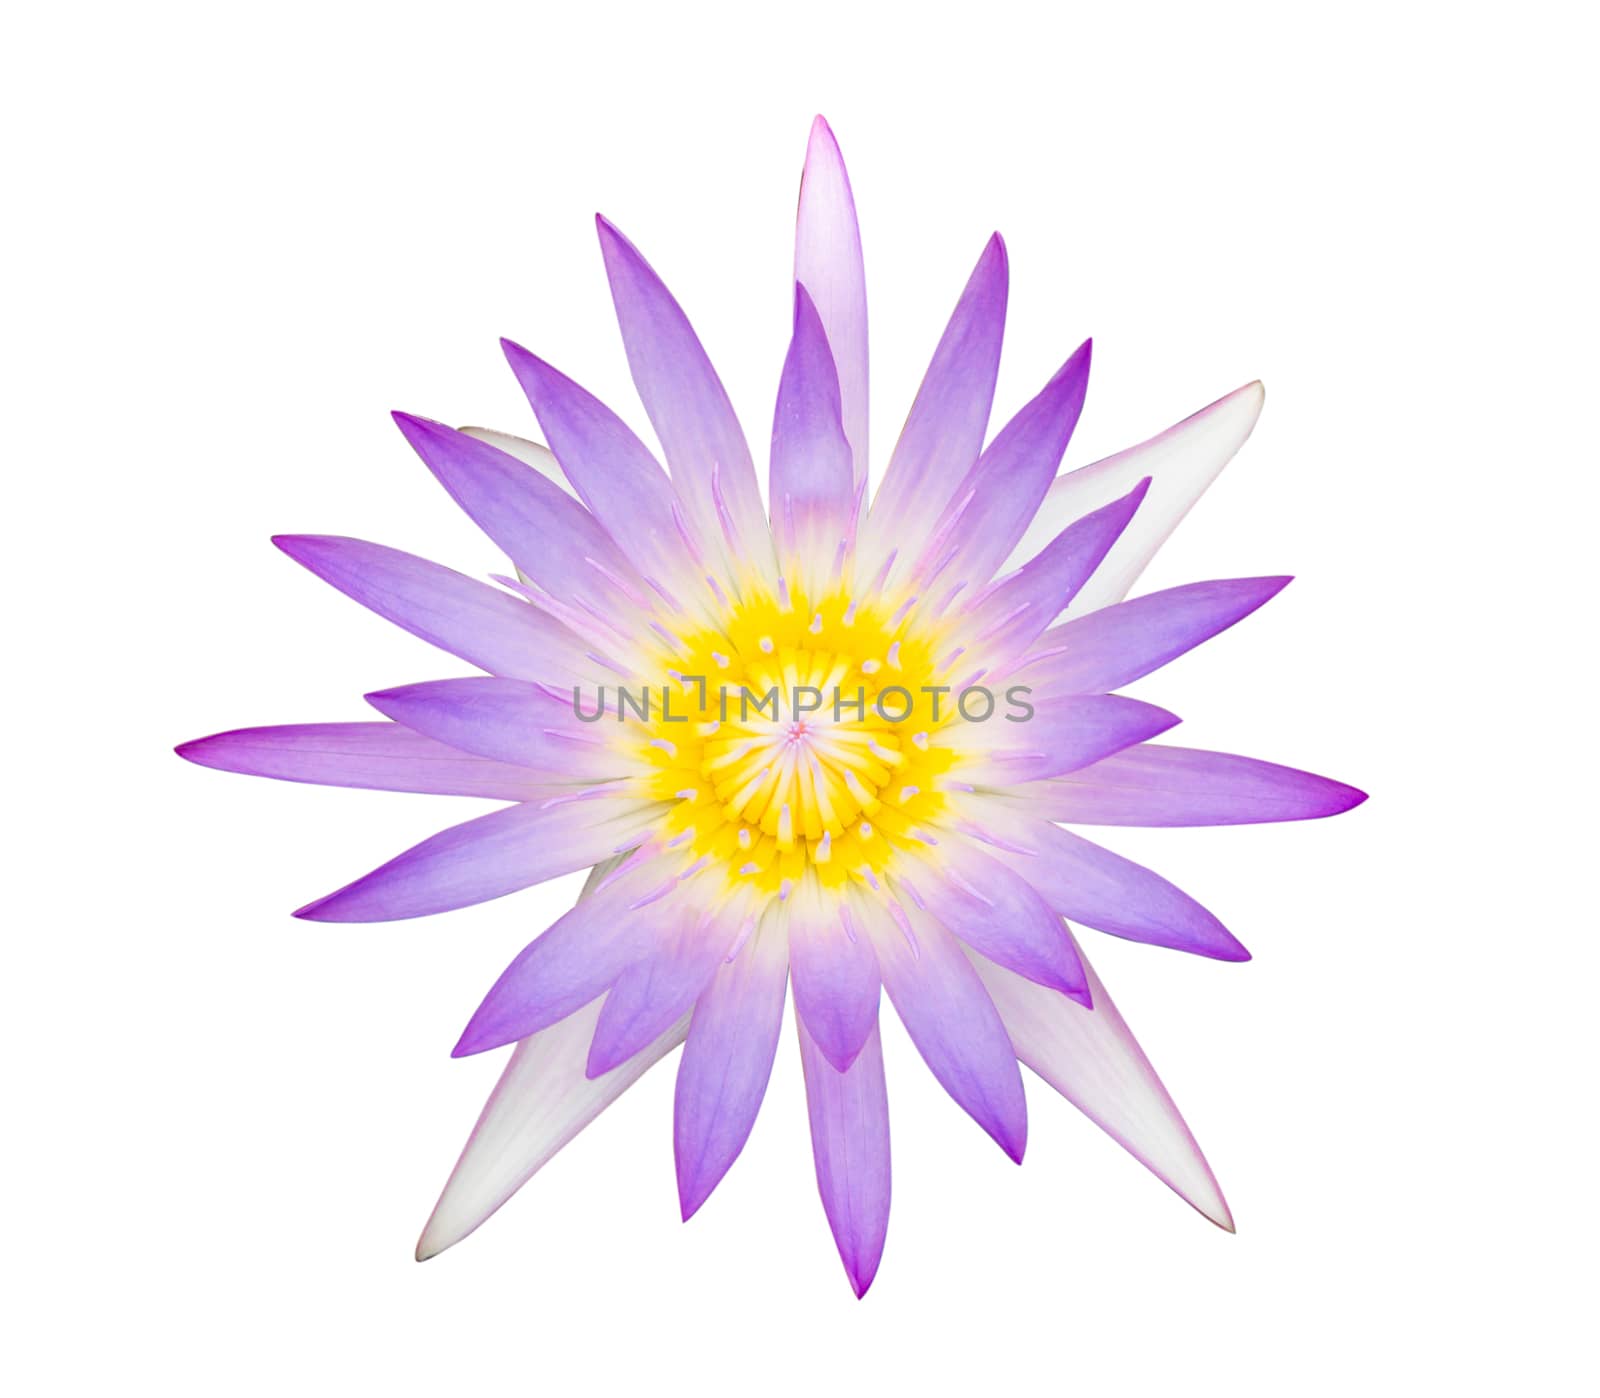 Closeup purple lotus flower plant isolated on white background by pt.pongsak@gmail.com